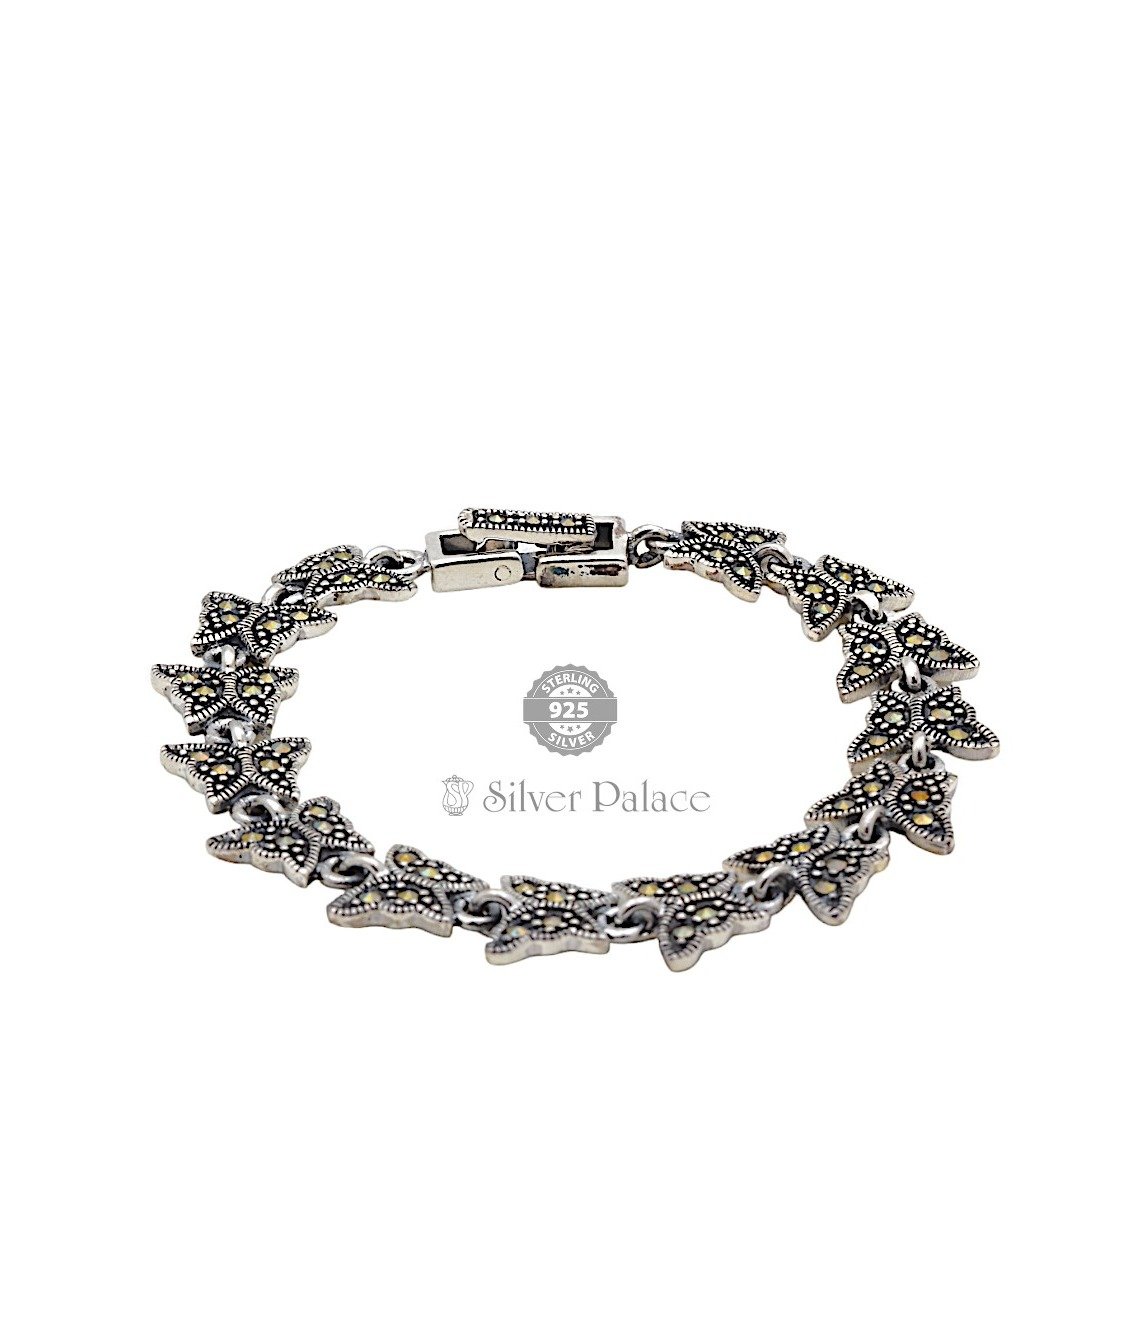  92.5 Sterling Silver Marcasite Butterfly bracelet For Girls Uses